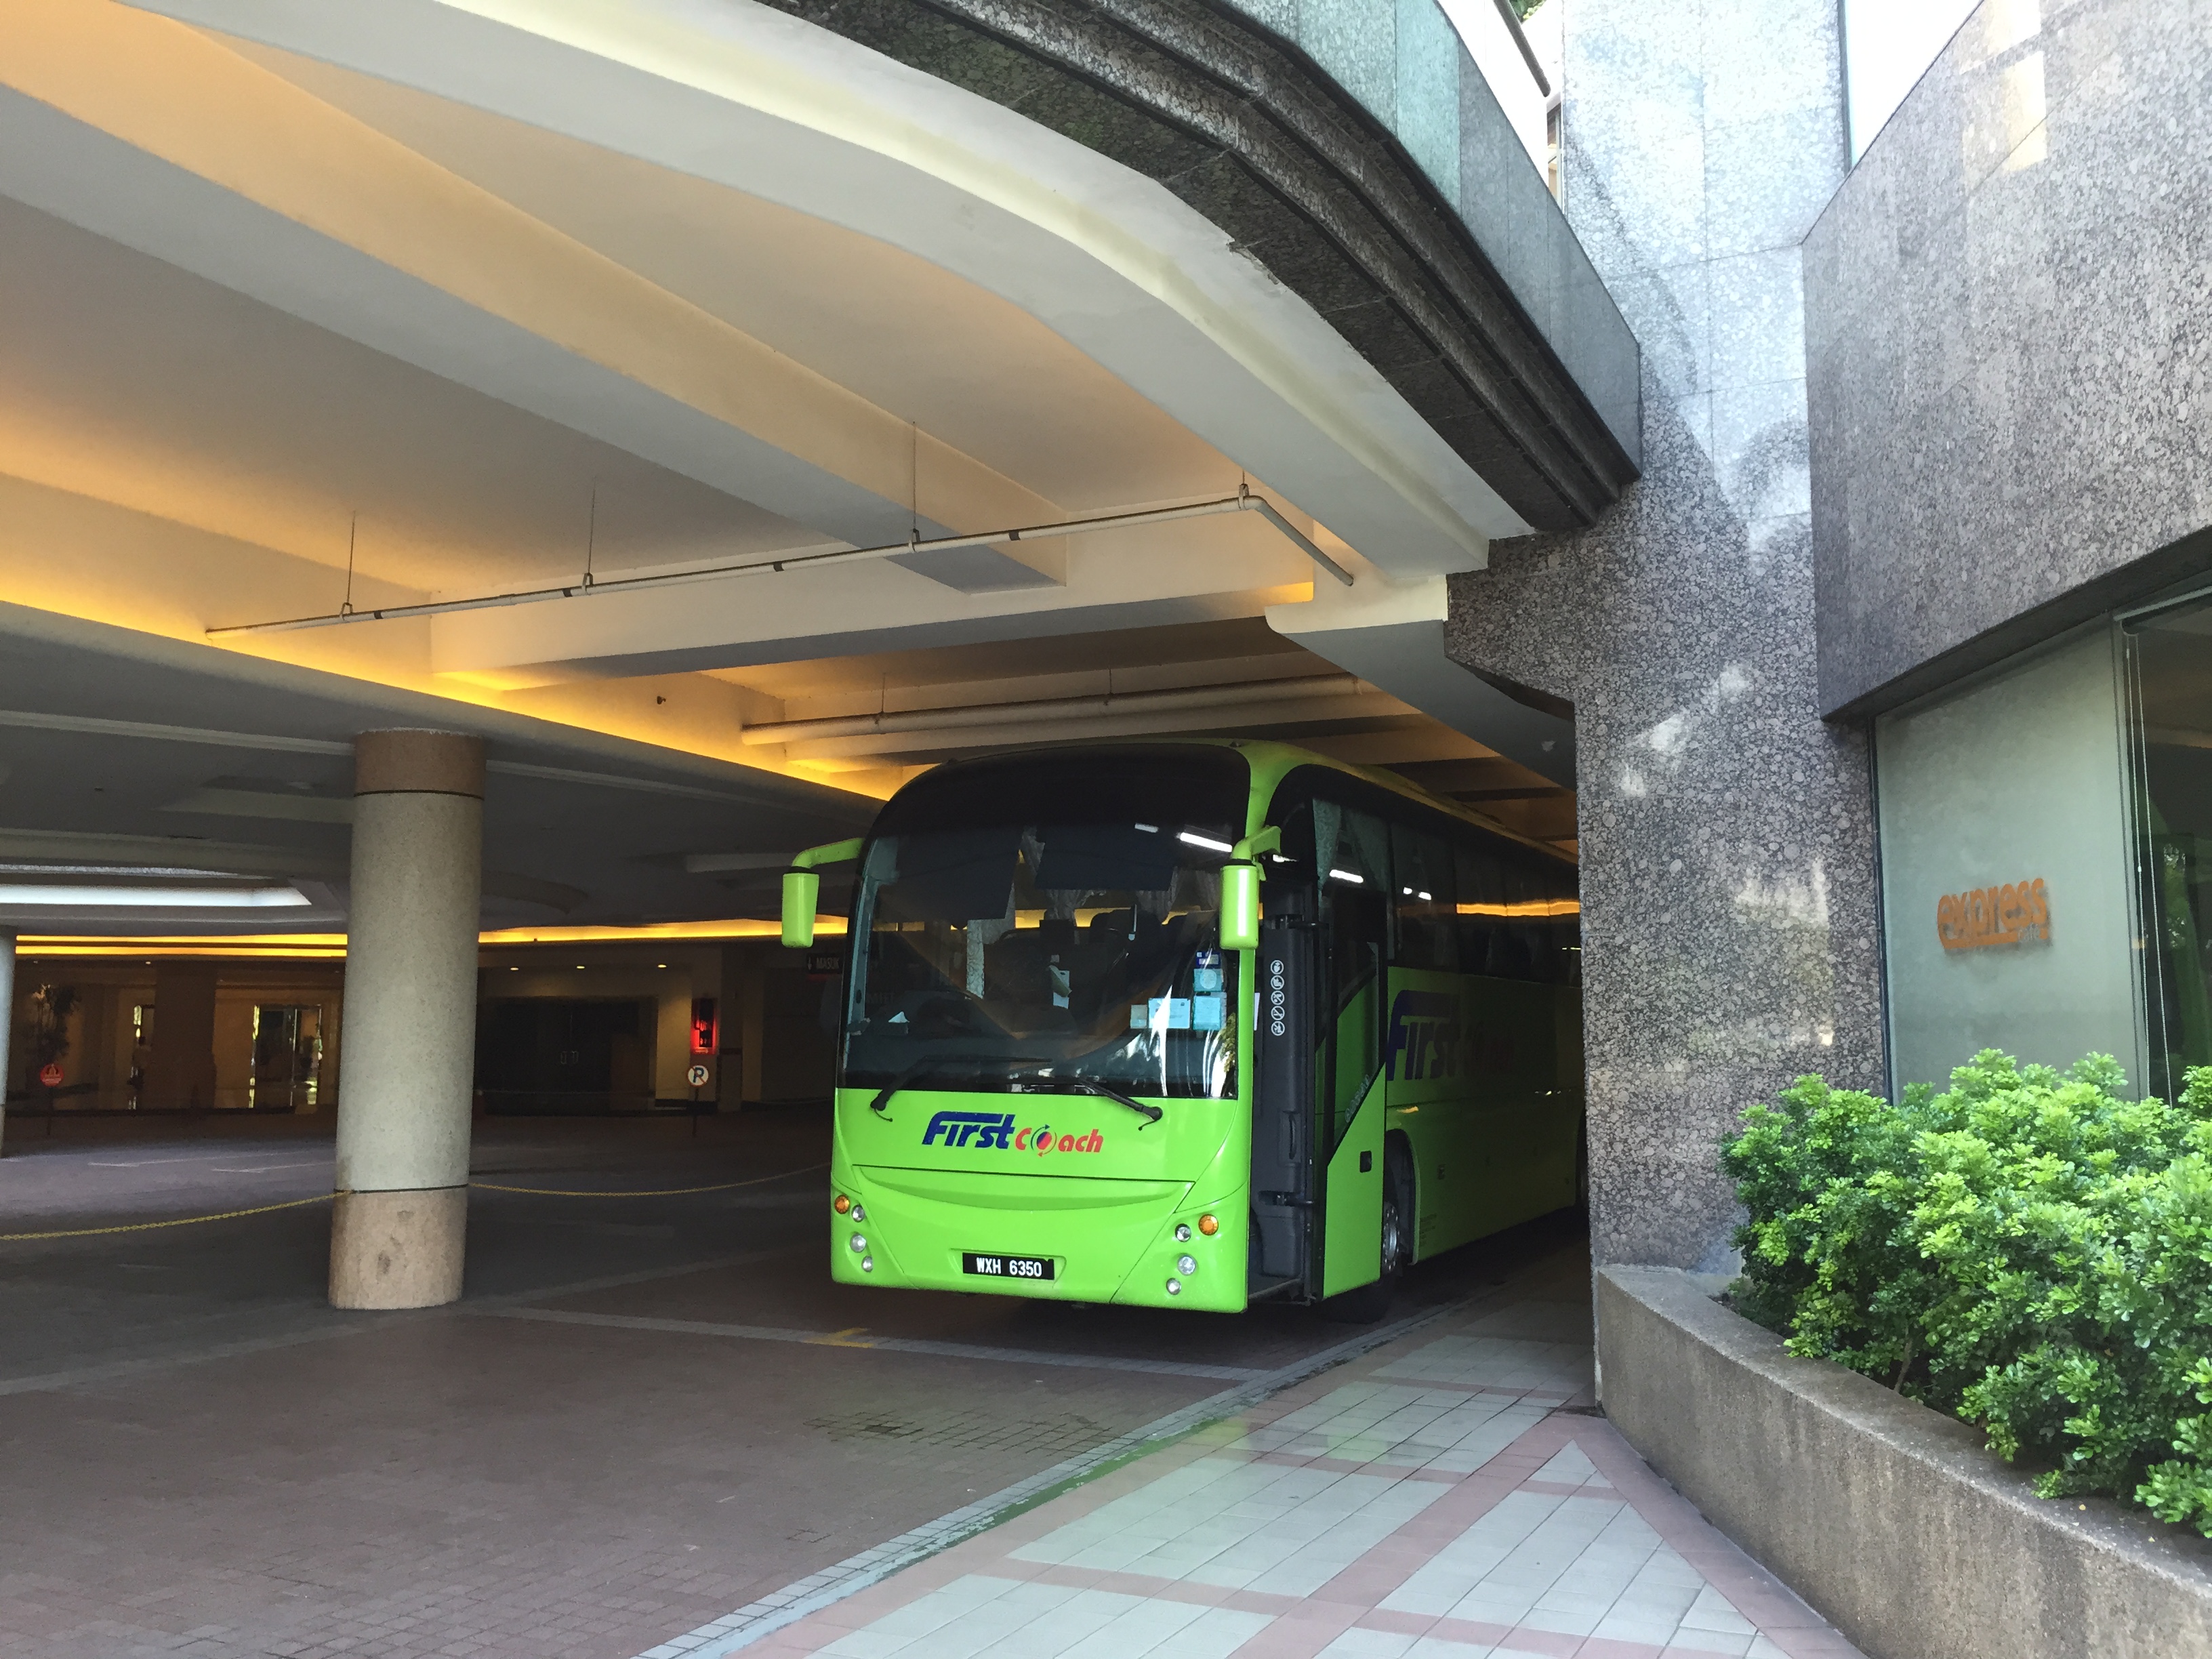 Bus from KL One Utama to Singapore Novena 